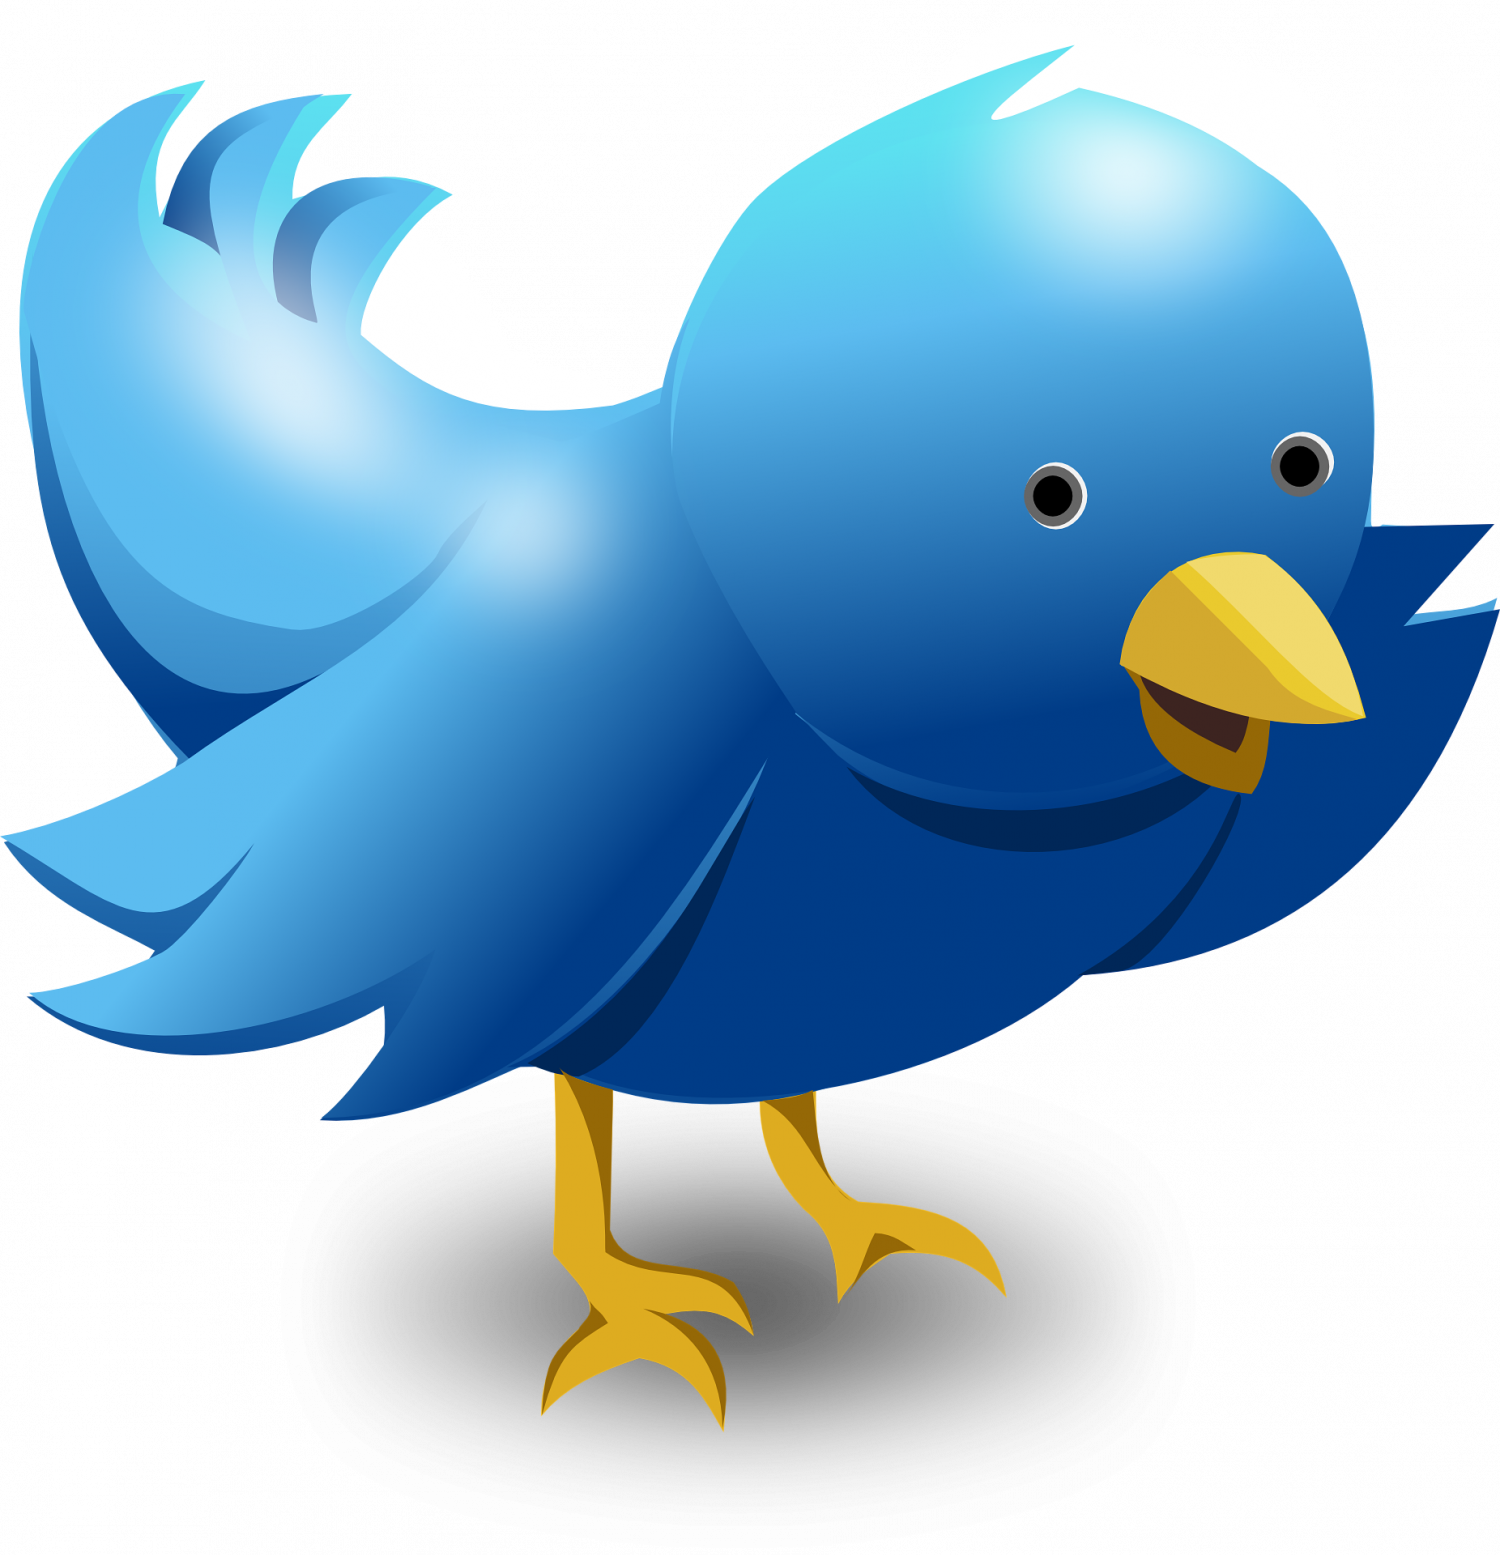 Cc0 Public Domain - Twitter Larry The Bird (1500x1555), Png Download